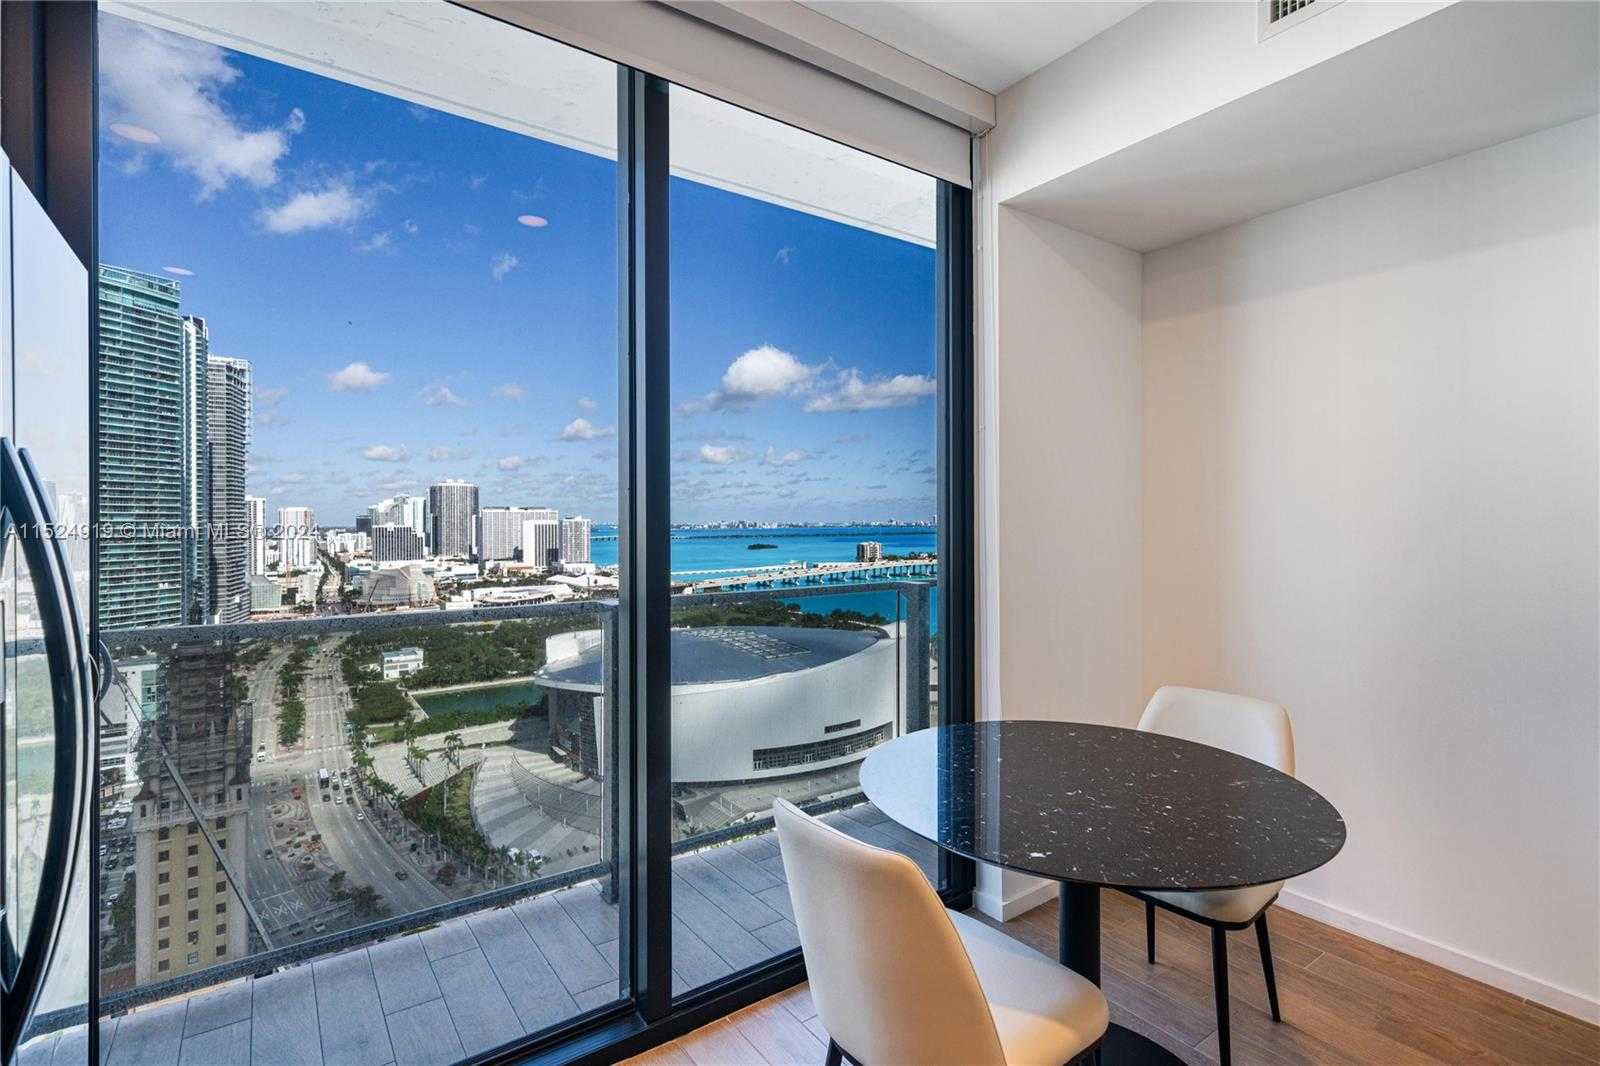 Miami  - Apartment 1 Bedroom